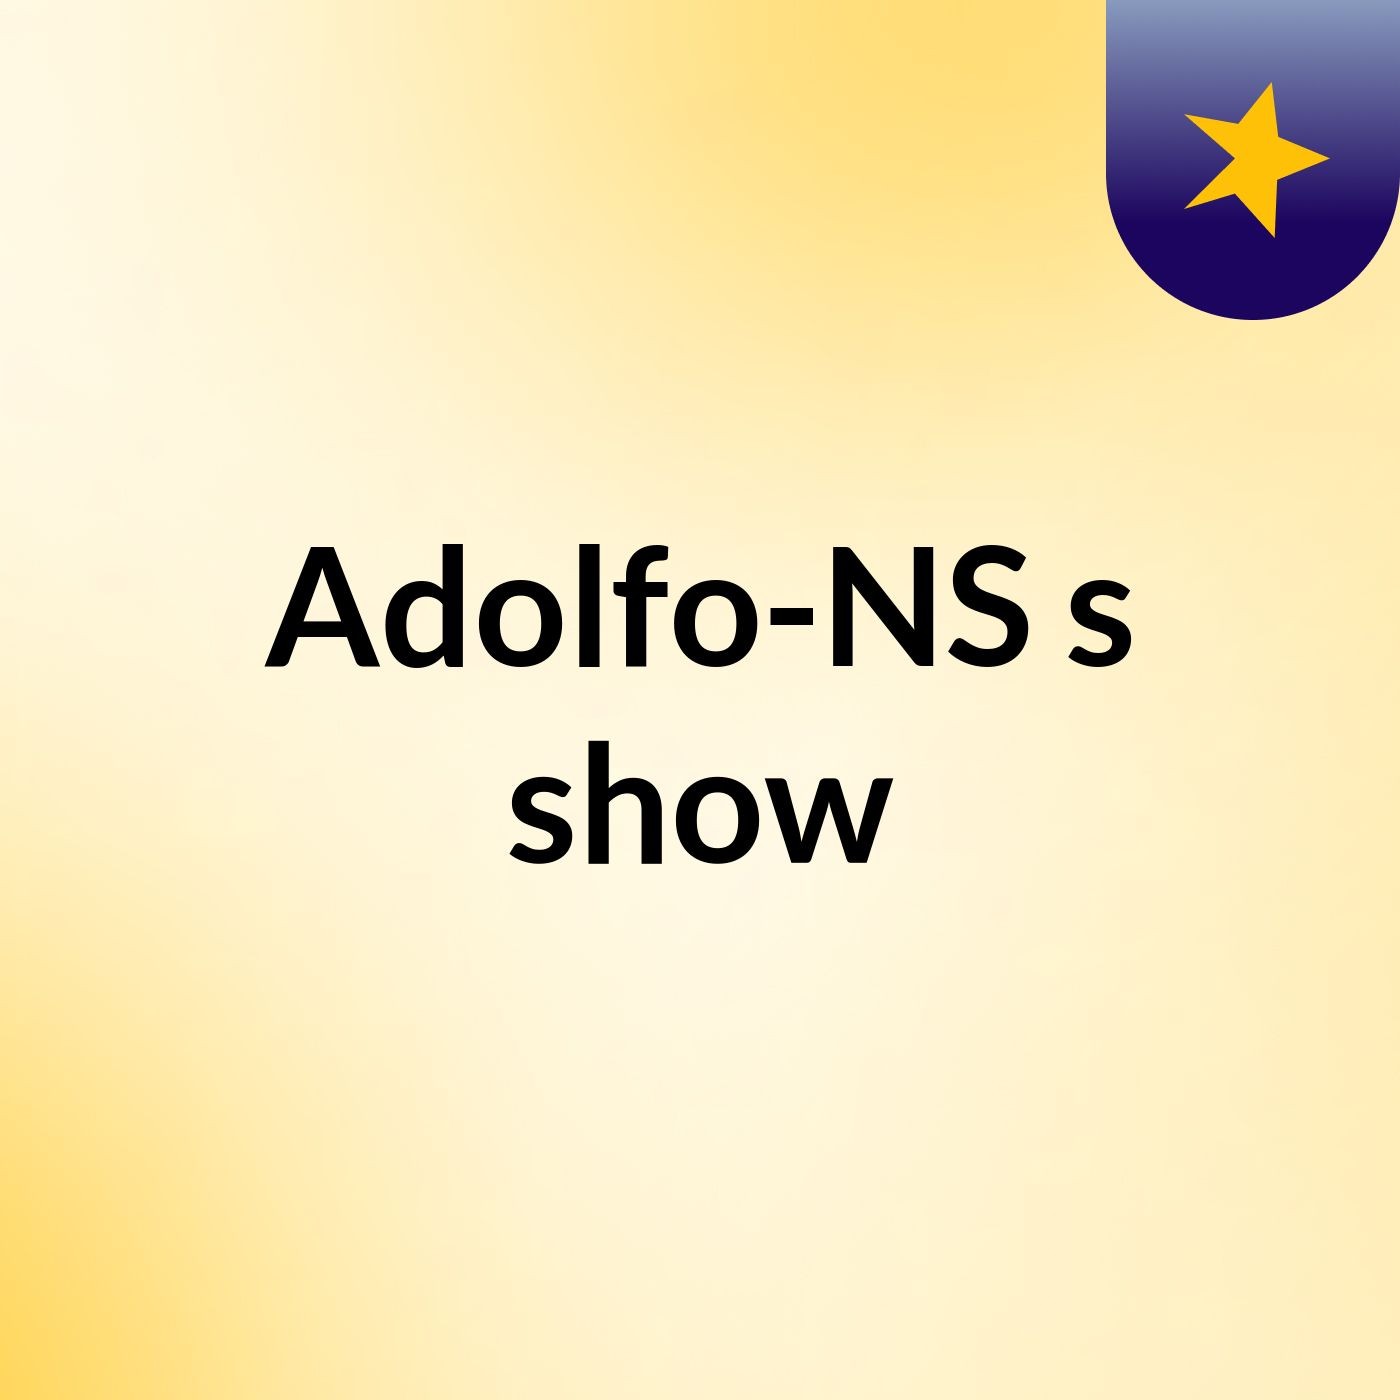 Adolfo-NS's show